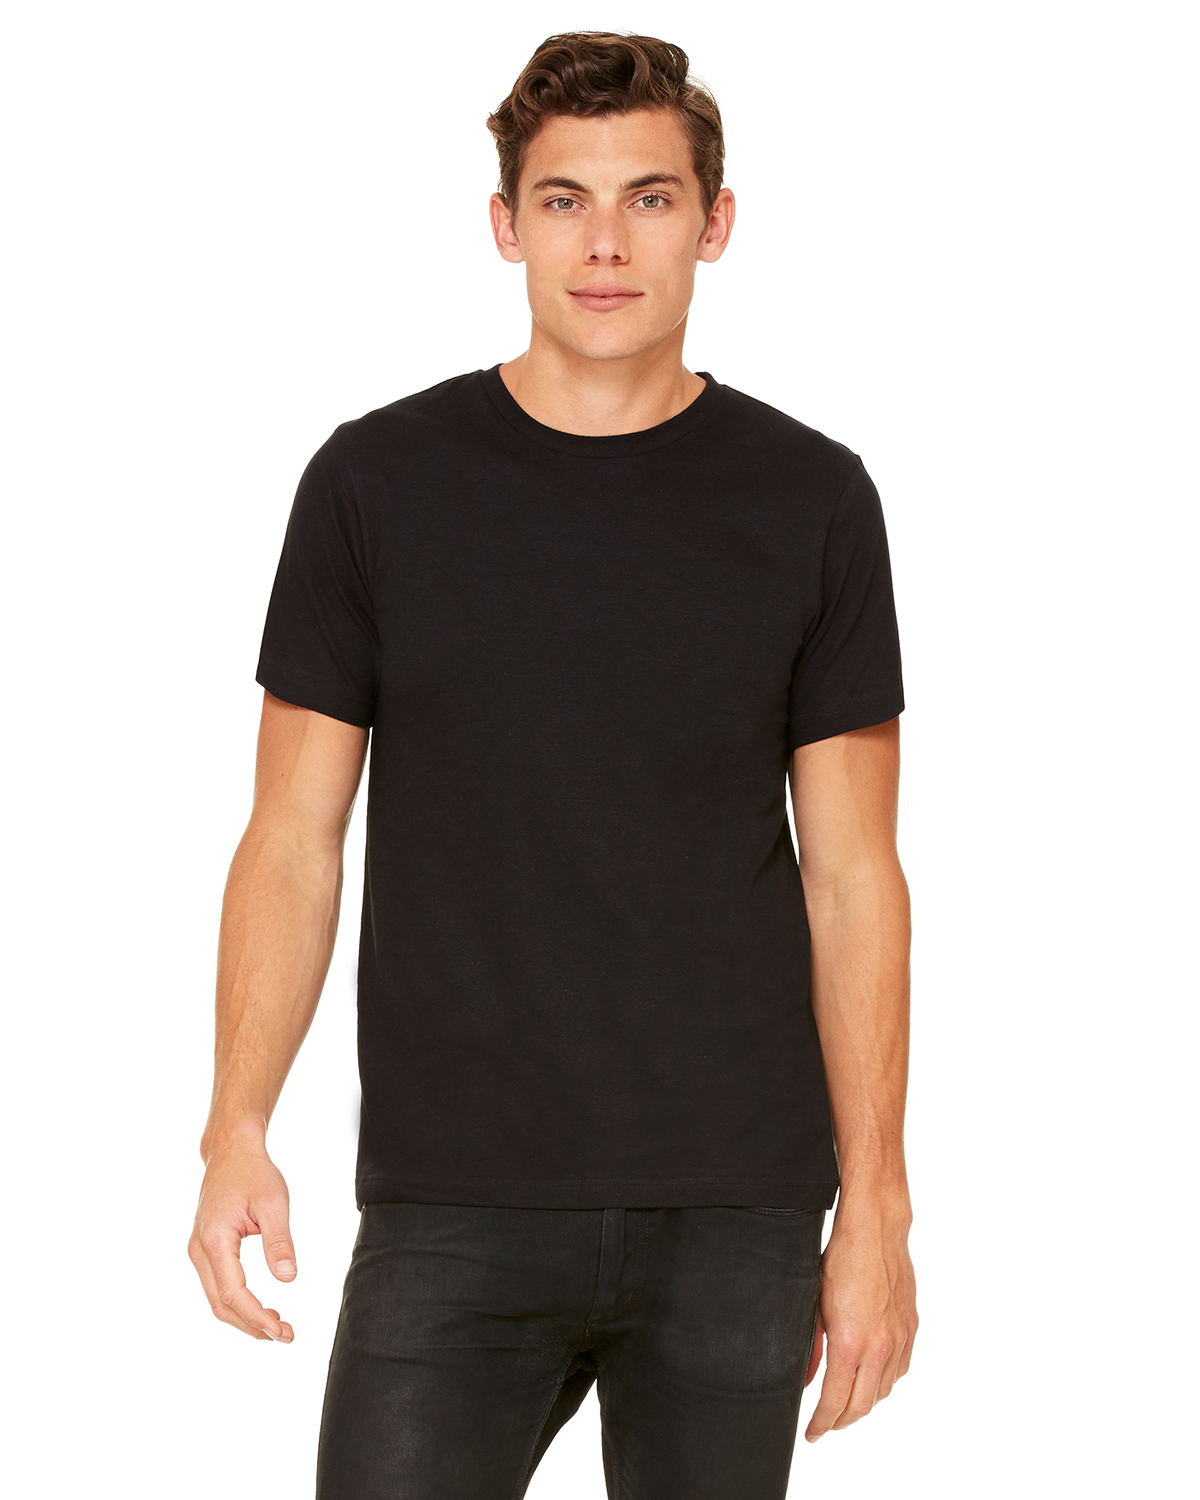 Canvas 3650 - Polyester/Cotton Unisex T-Shirt $9.12 - T-Shirts